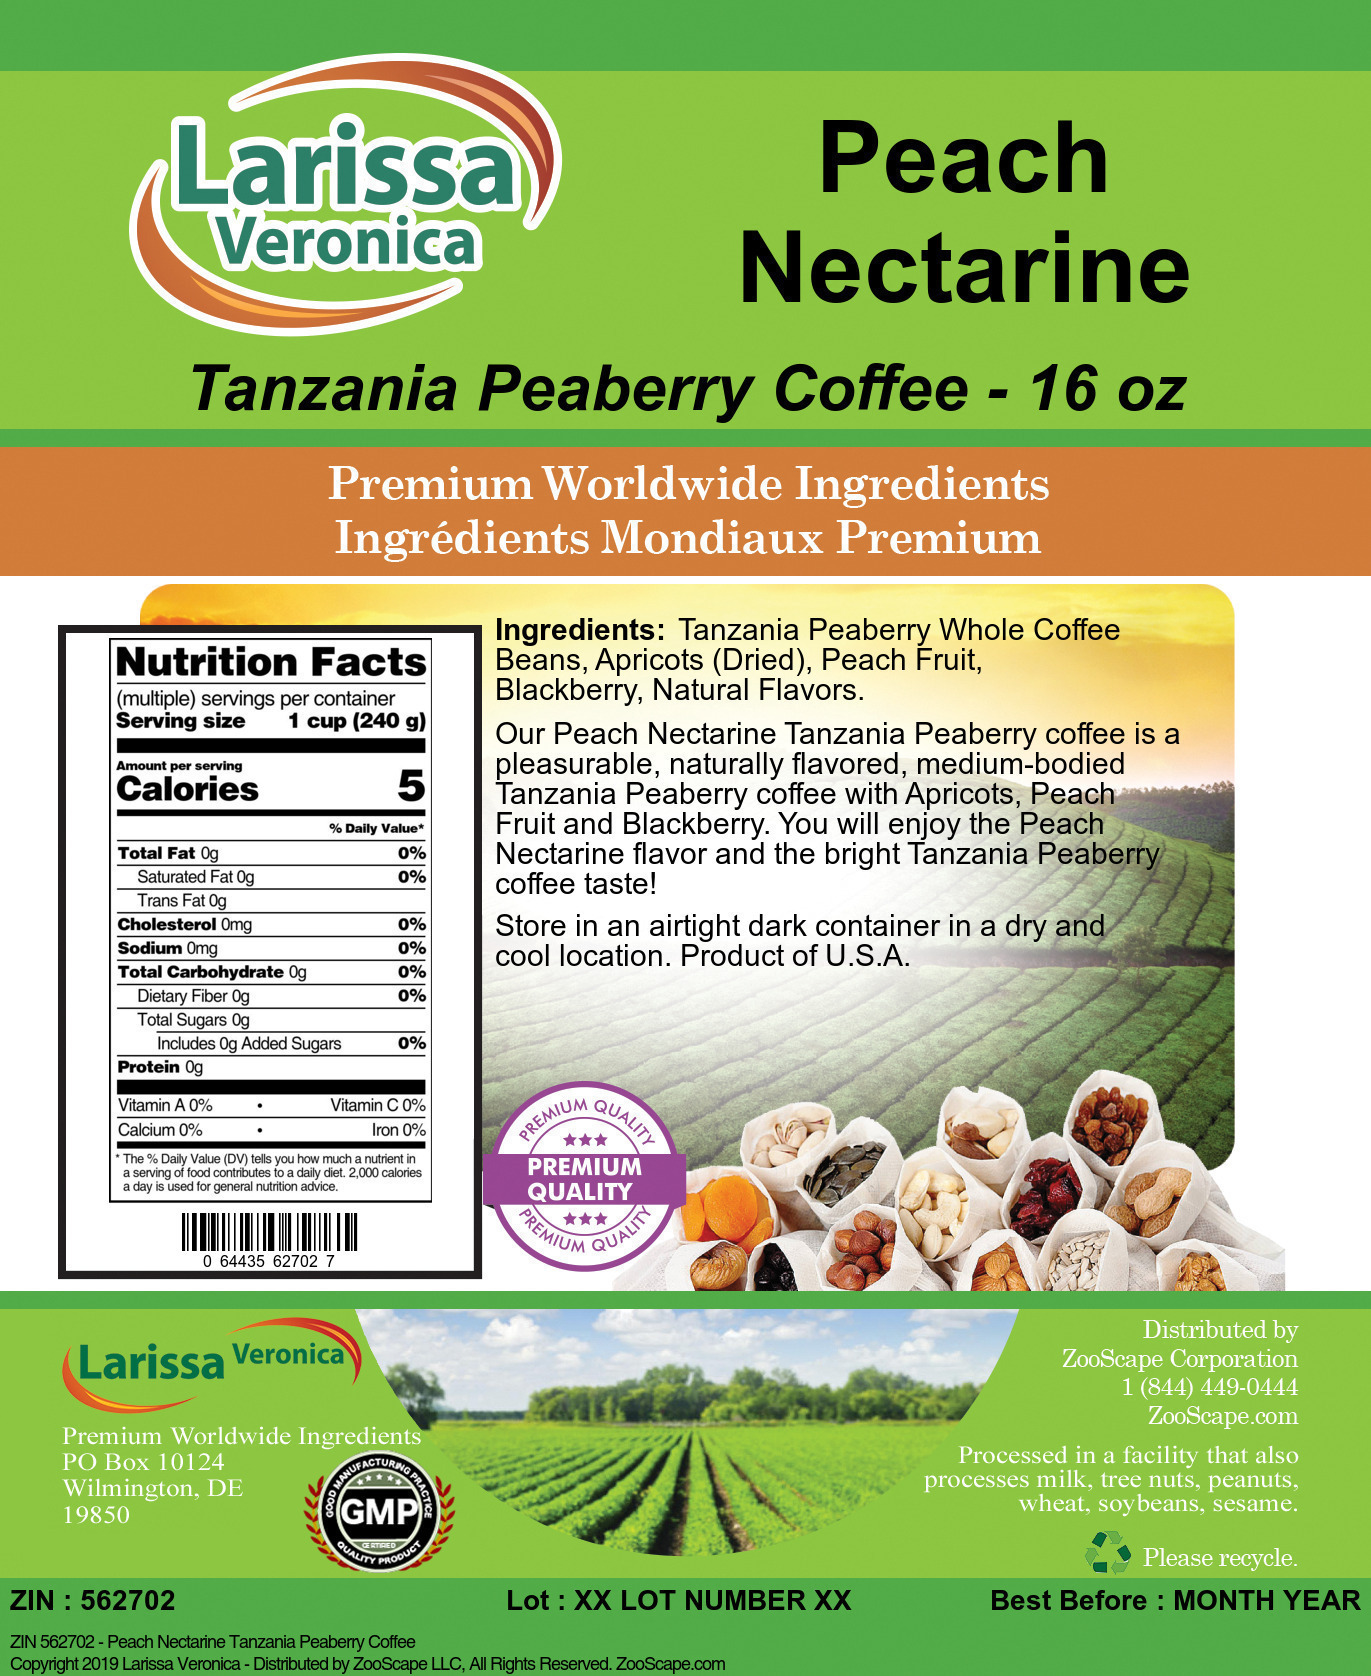 Peach Nectarine Tanzania Peaberry Coffee - Label